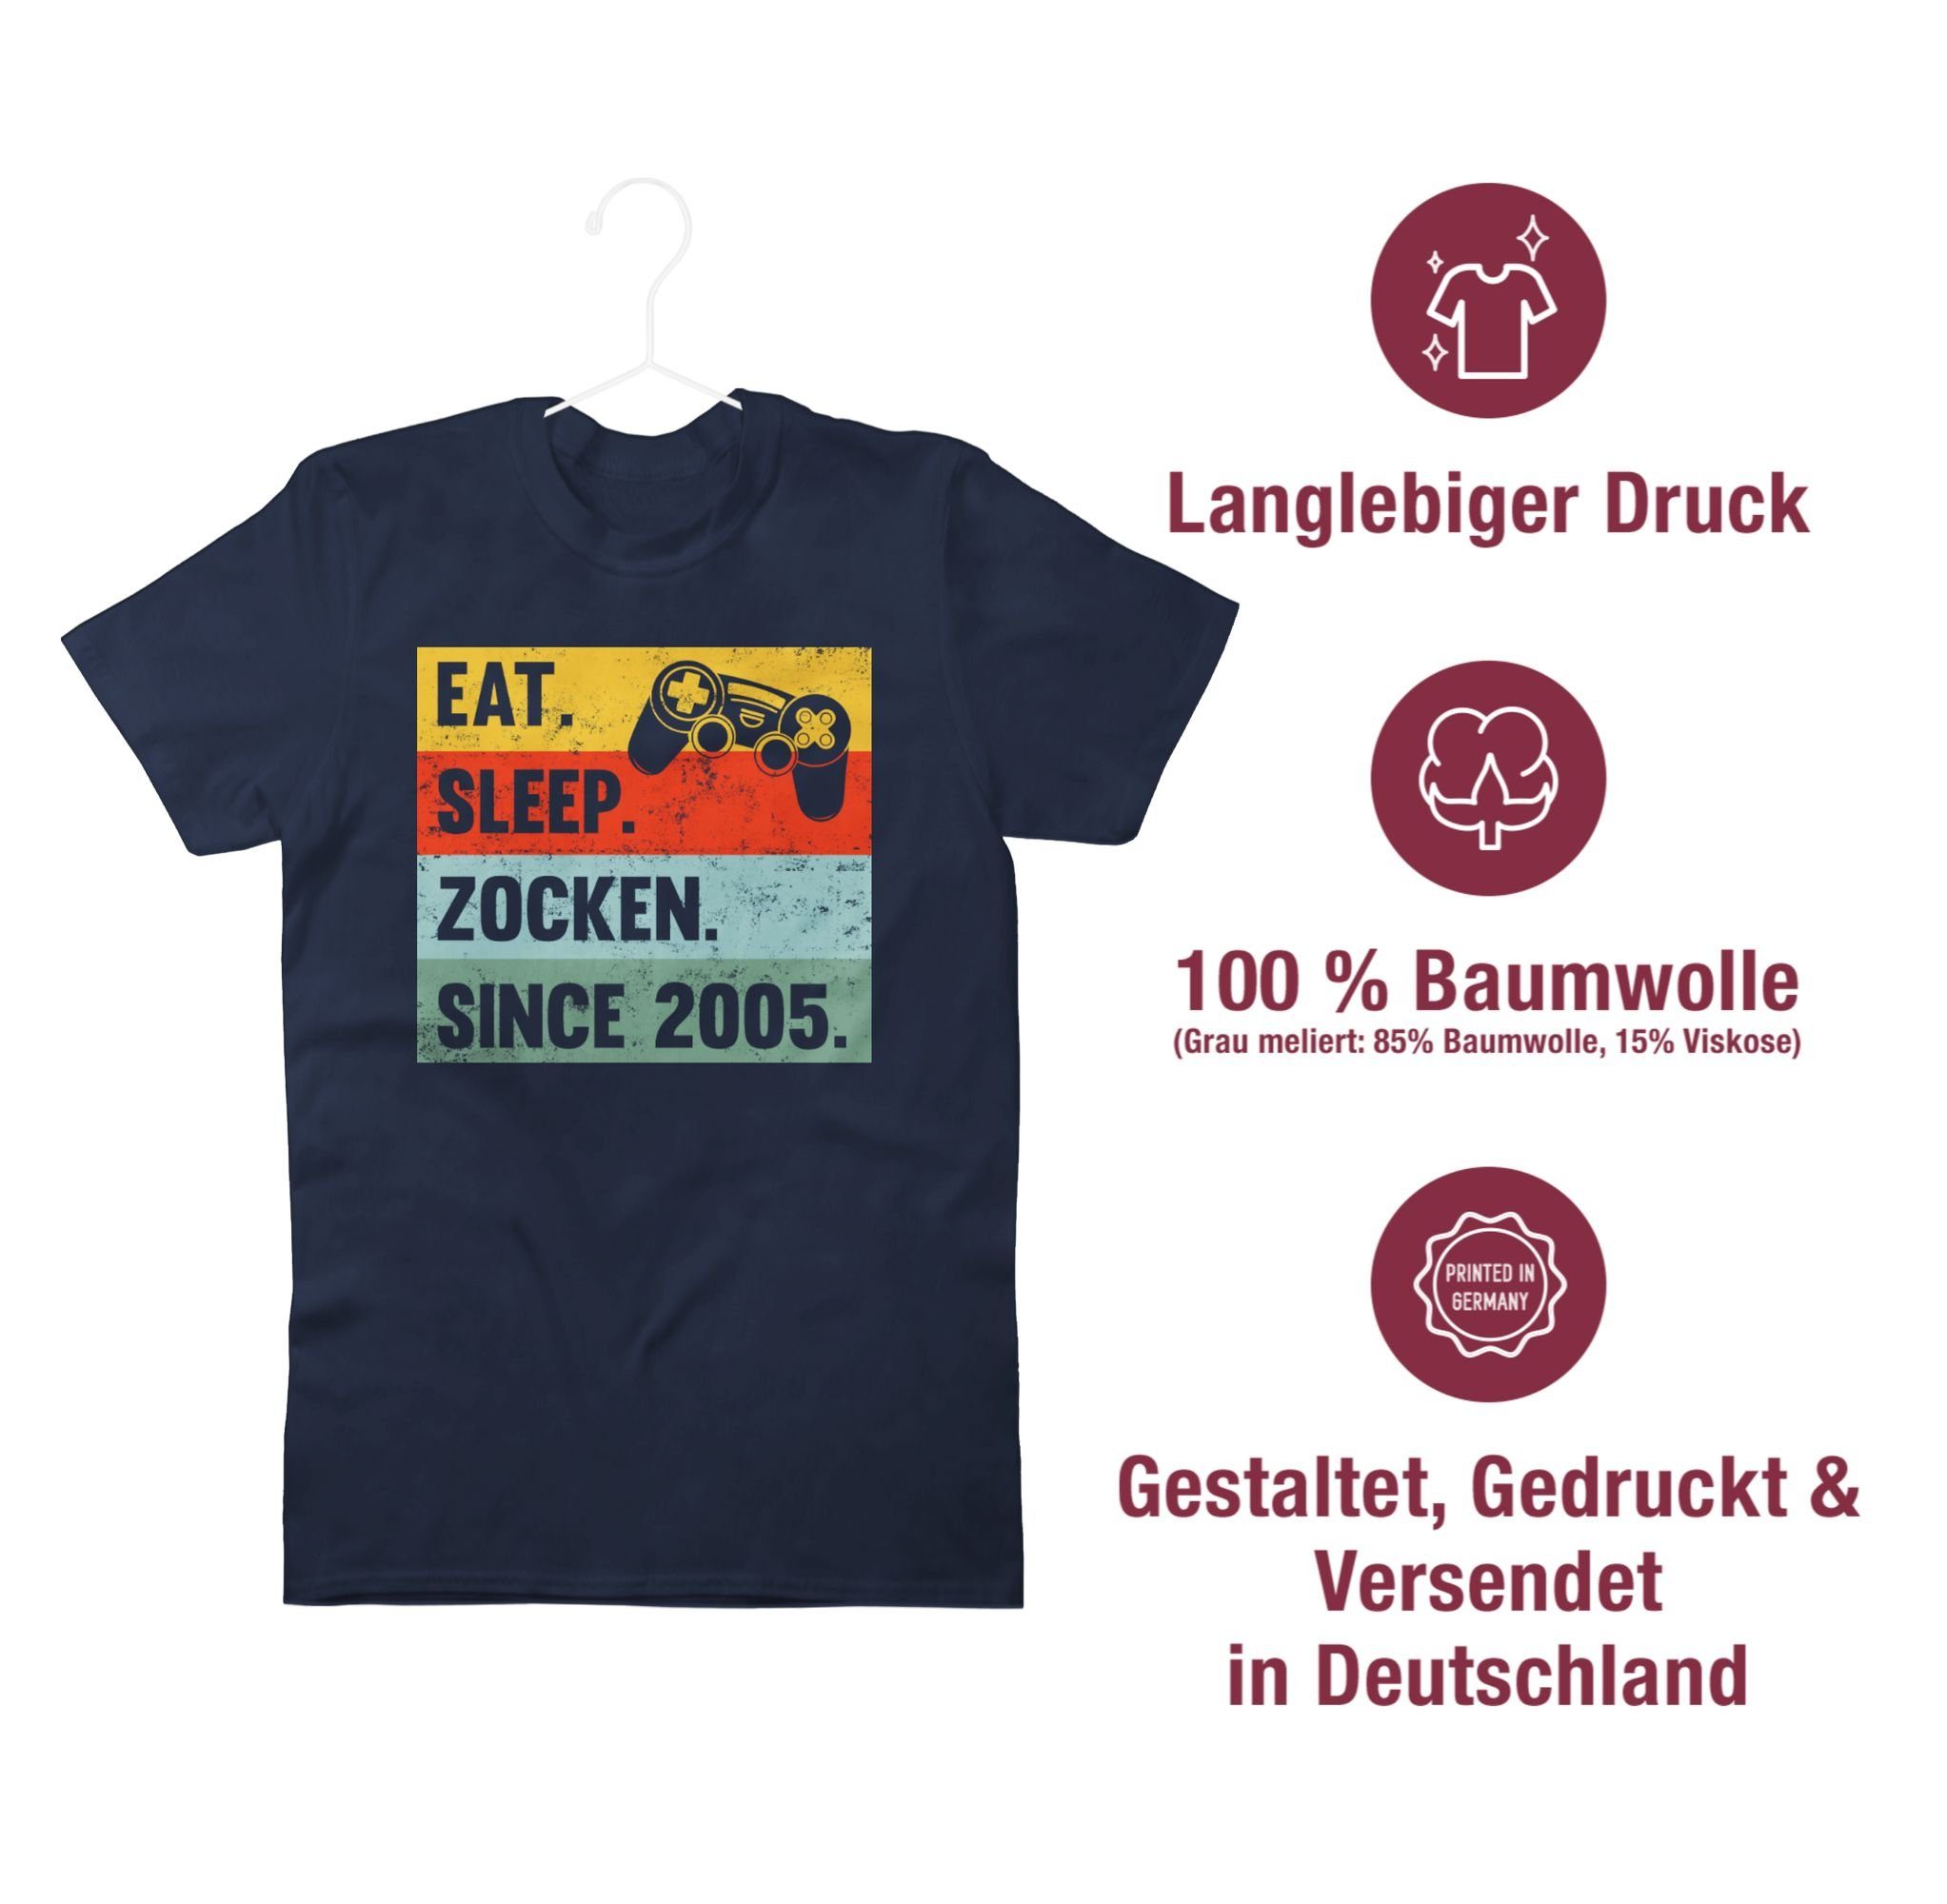 Shirtracer T-Shirt Eat Sleep Zocken 2005 Blau Navy 18. Since 03 Geburtstag